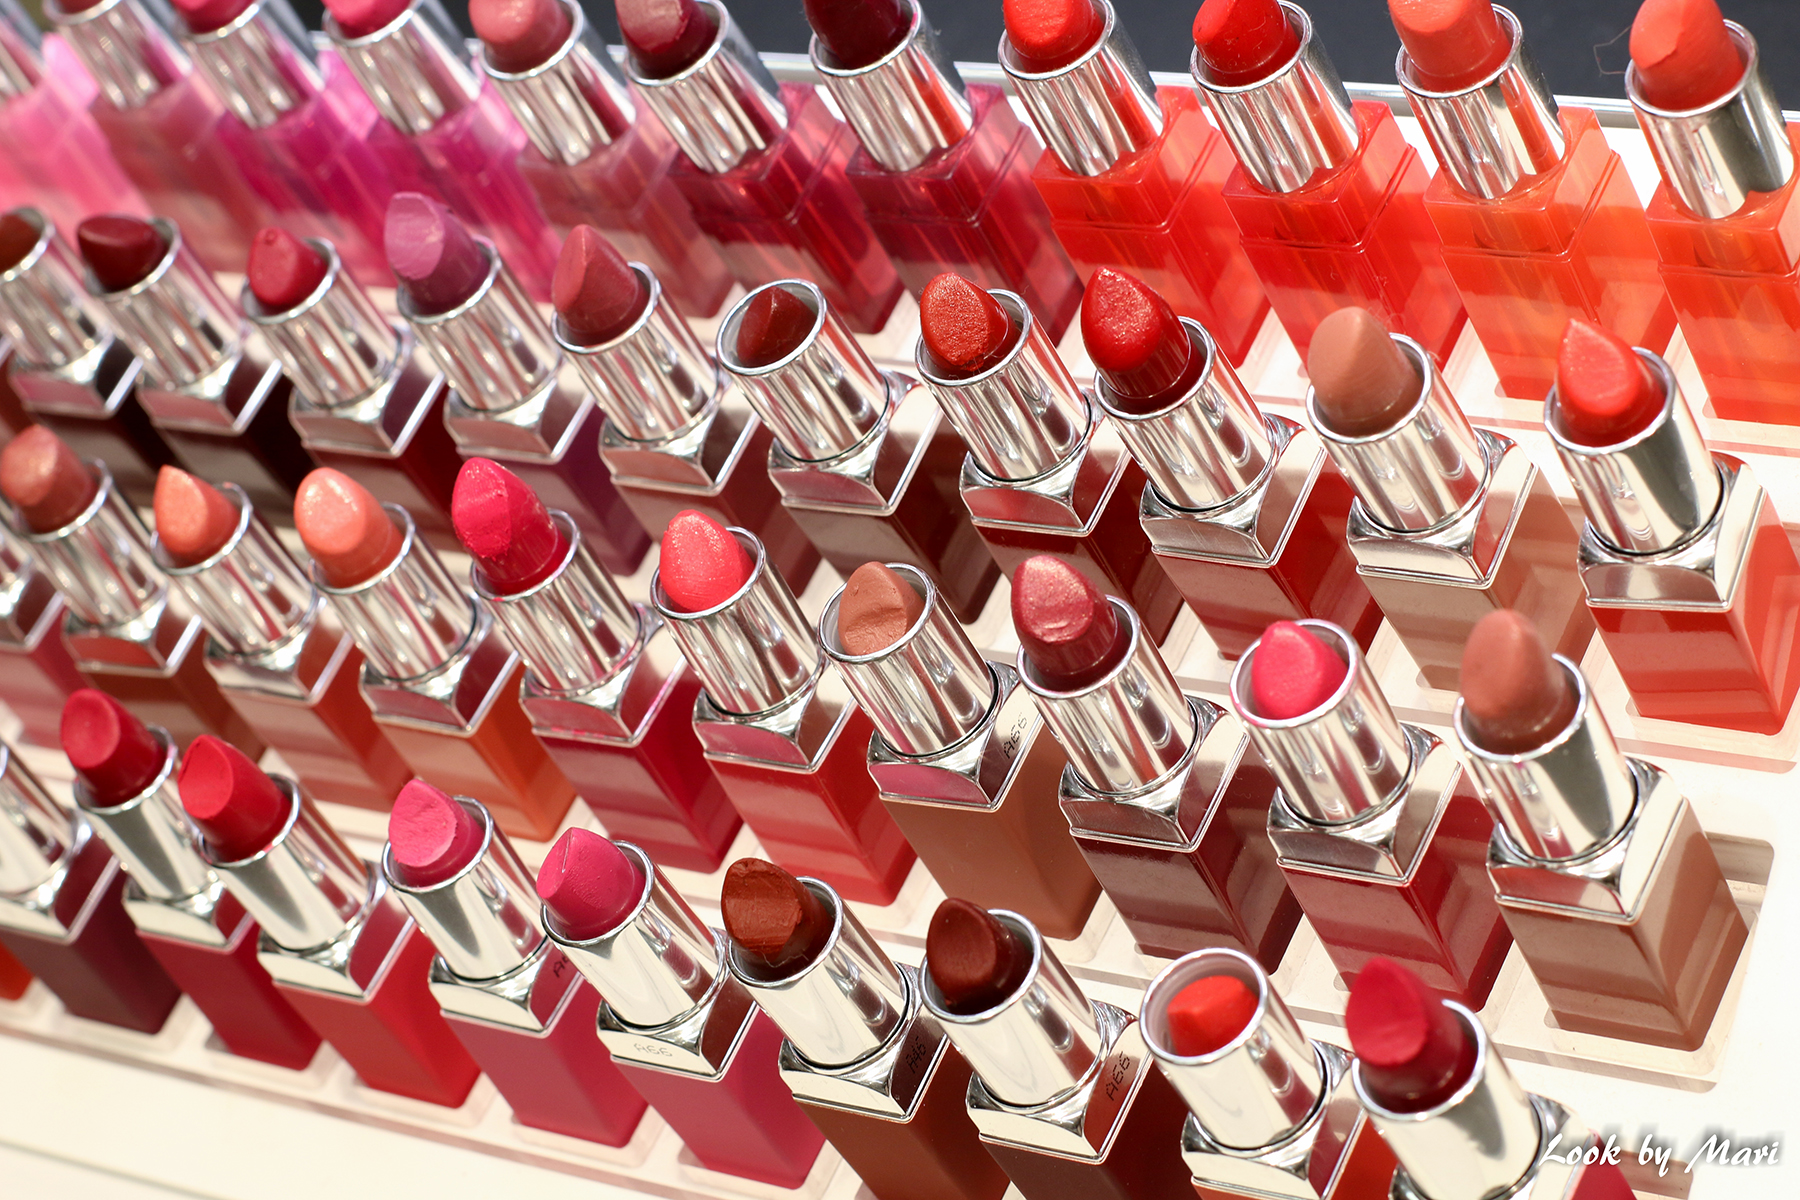 19 clinique lipsticks colors shades clinique huulipunat värit sävyt